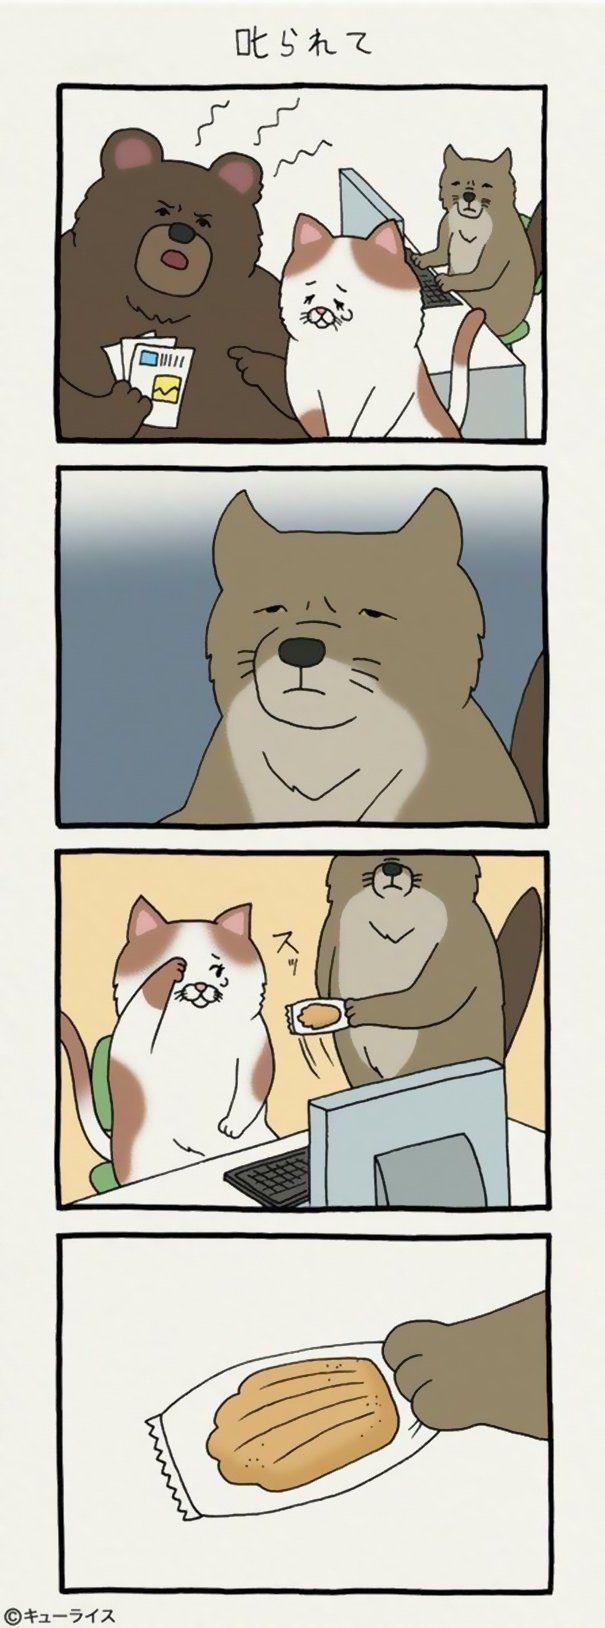 Dog offering snacks to a cat - Doggo Comics